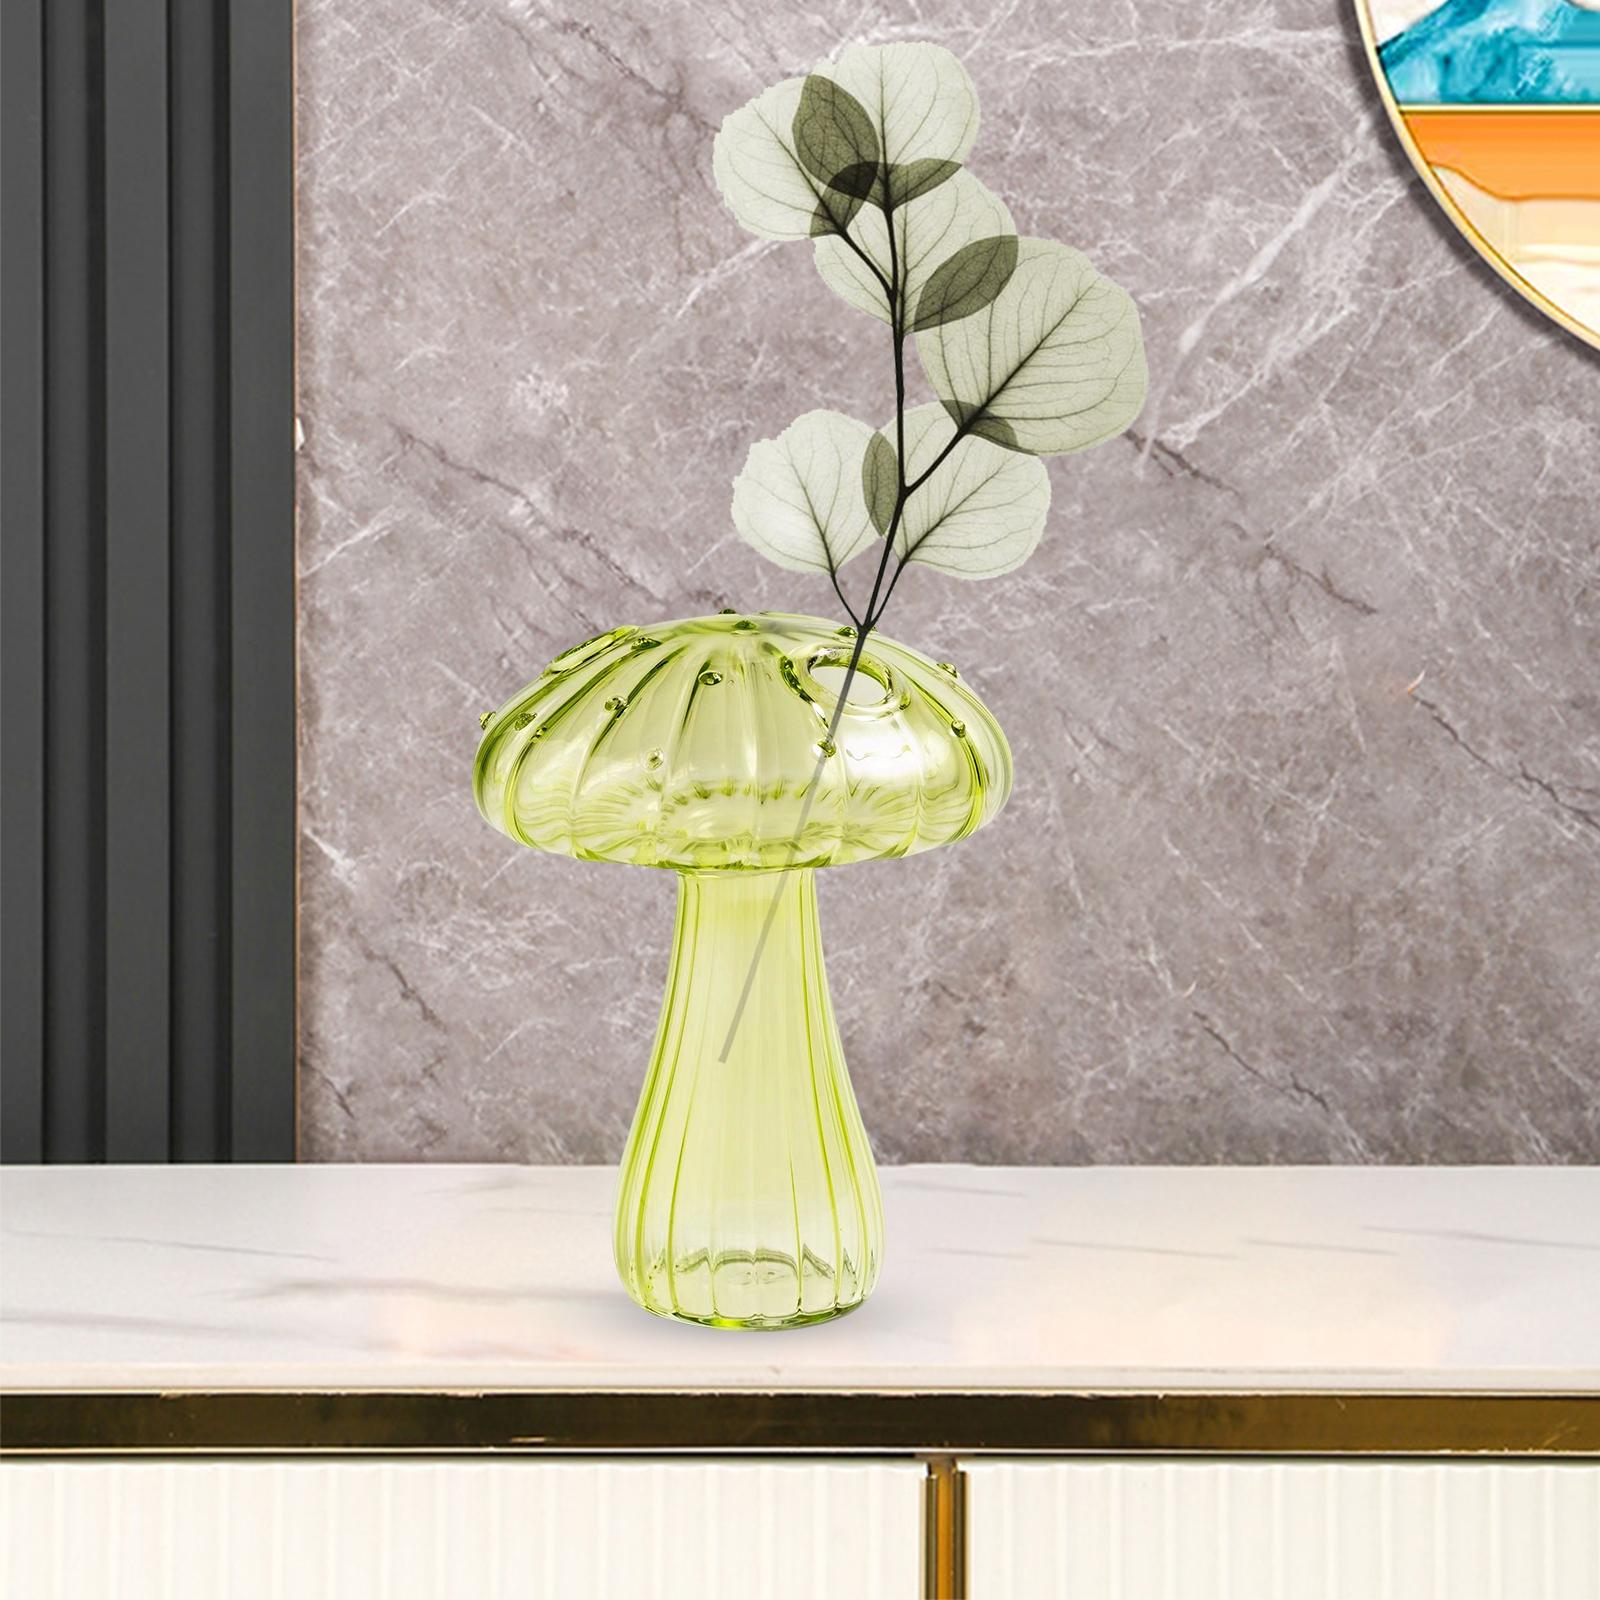 Creative Flower Vase Decorative Vases Mushroom Shaped Glass Vase Home Decor Green